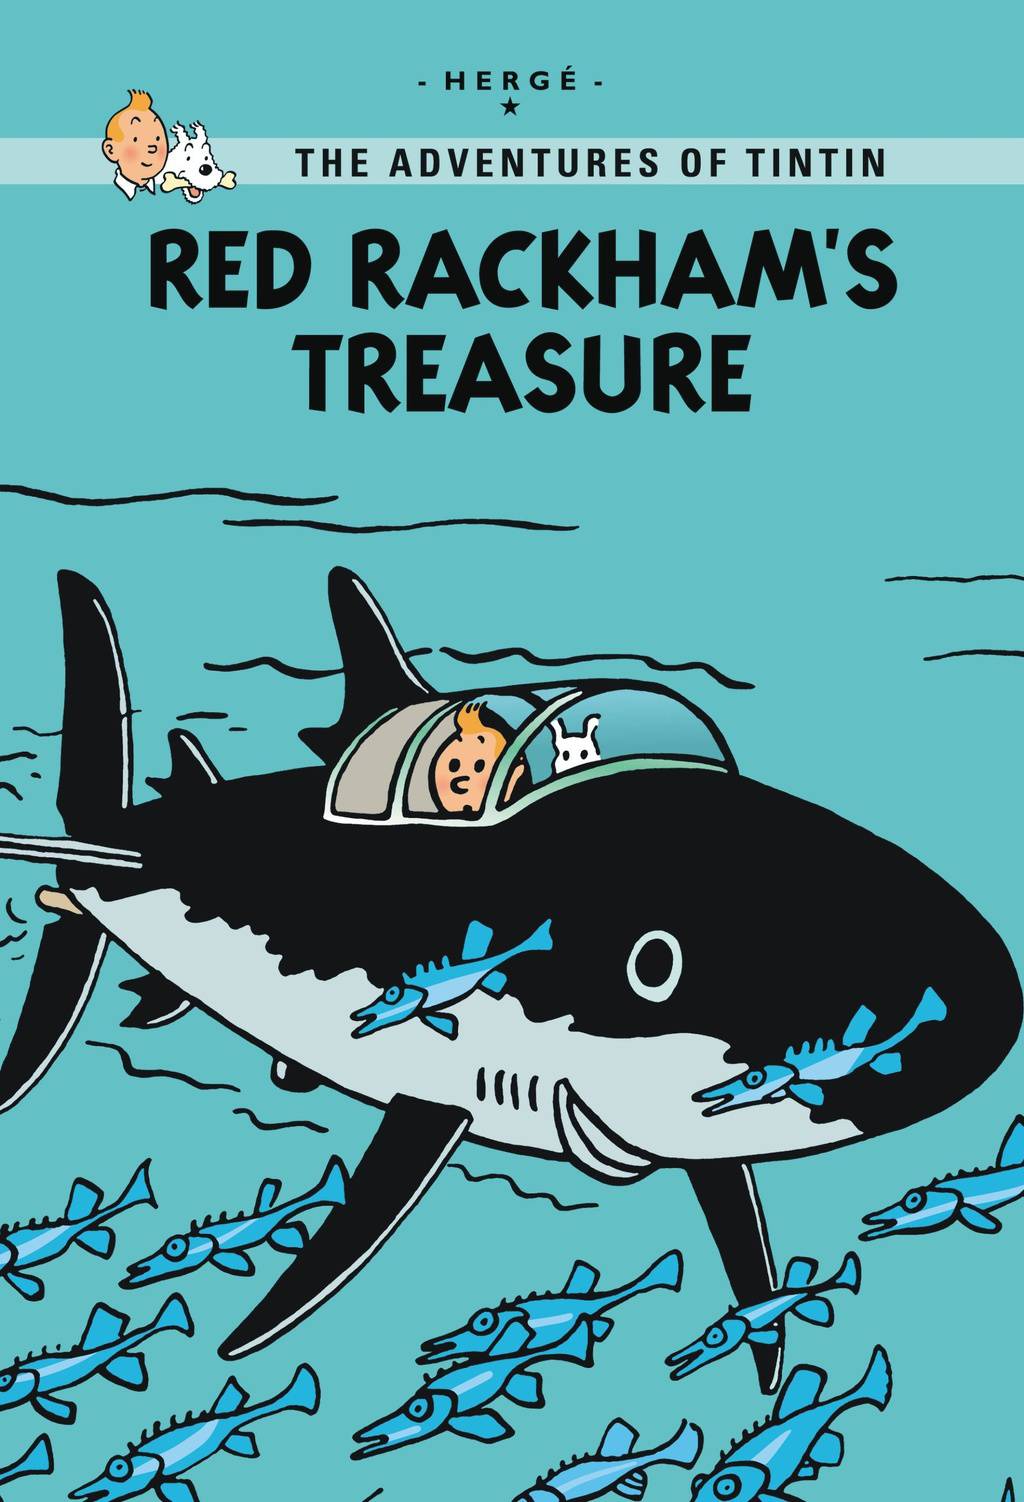 Tintin Young Reader Edition Graphic Novel #2 Red Rackhams Treasure New Printing